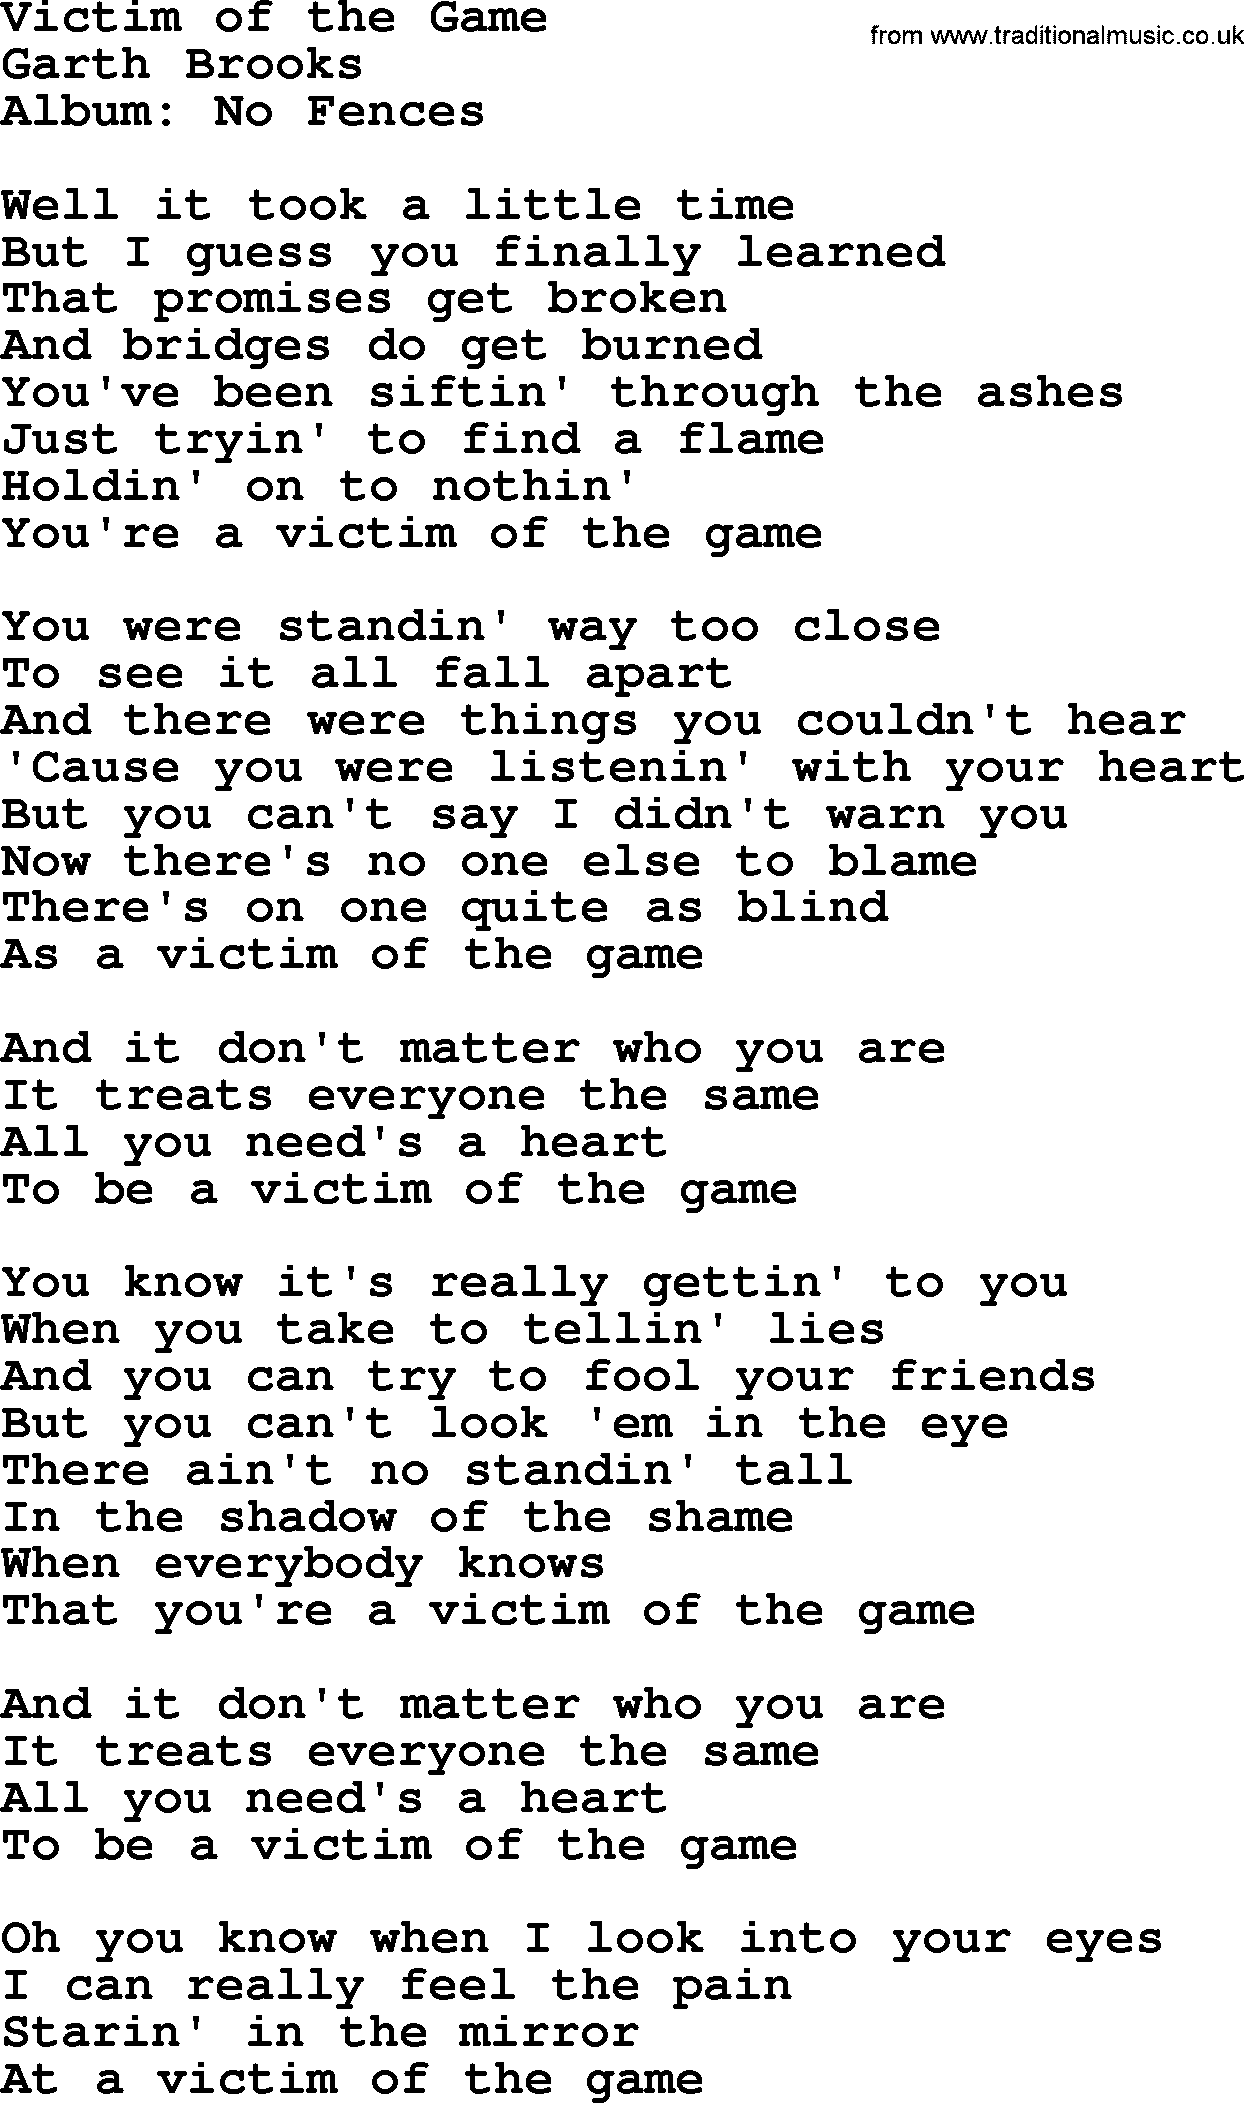 Garth Brooks song: Victim Of The Game, lyrics